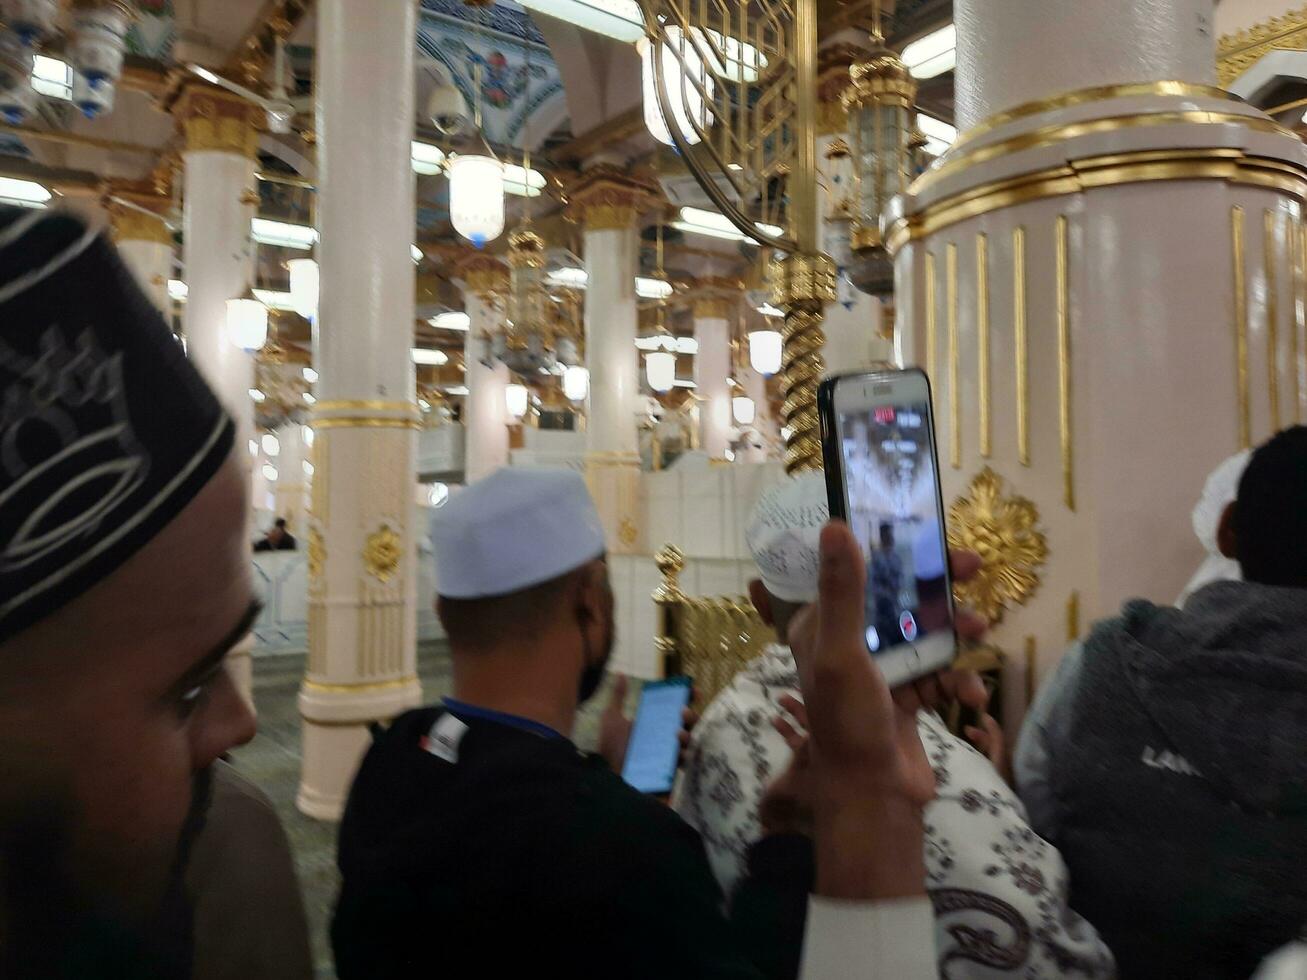 medina, Arabia arabia, dec 2022 - musulmano pellegrini siamo andando per visitare roza rasool a Masjid al nabawi medina. foto